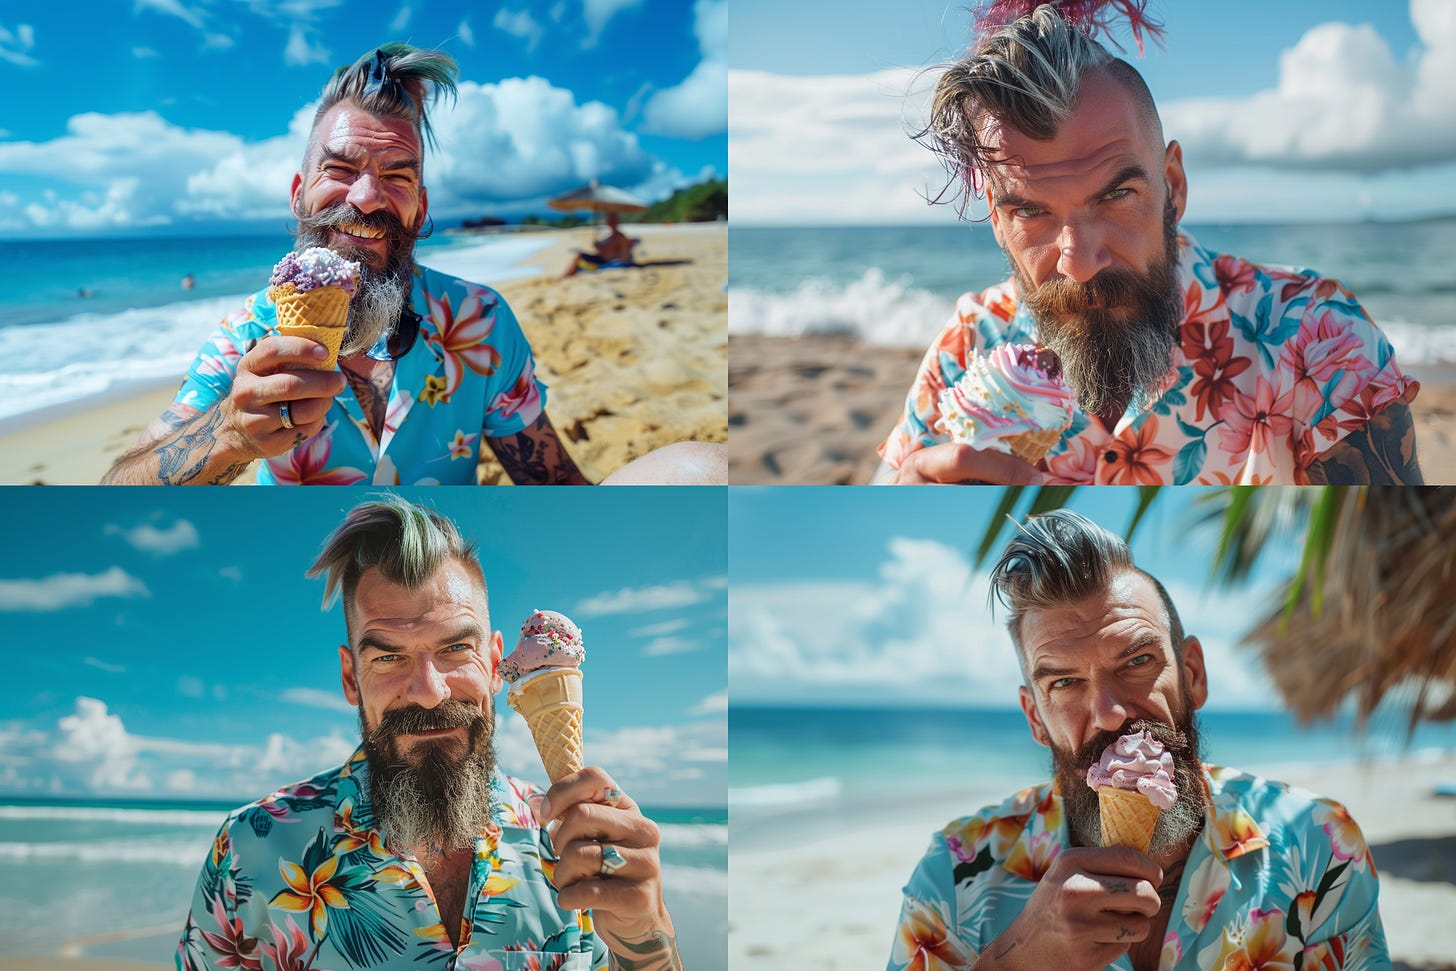 Consistent character in Midjourney: Viking having ice cream